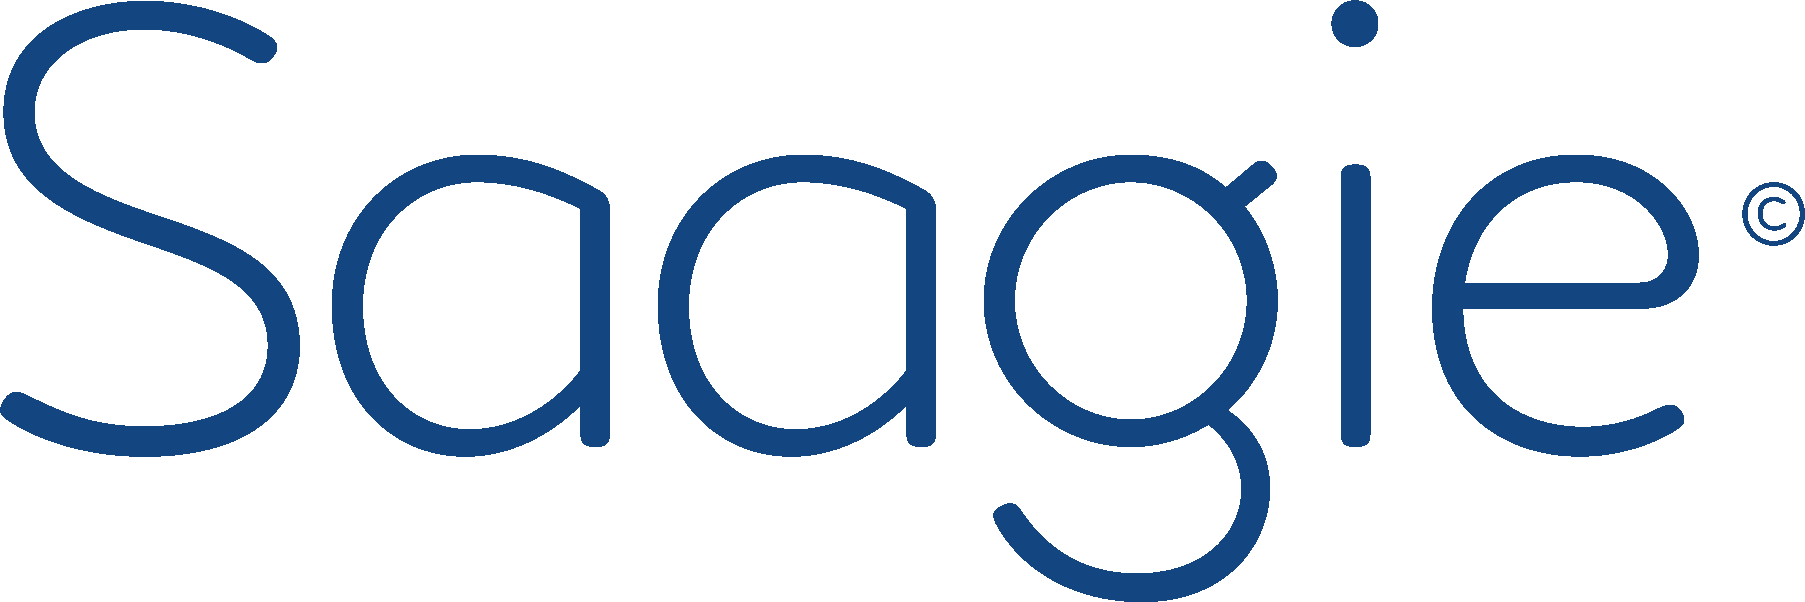 saagie-logo-blue-copyrighted